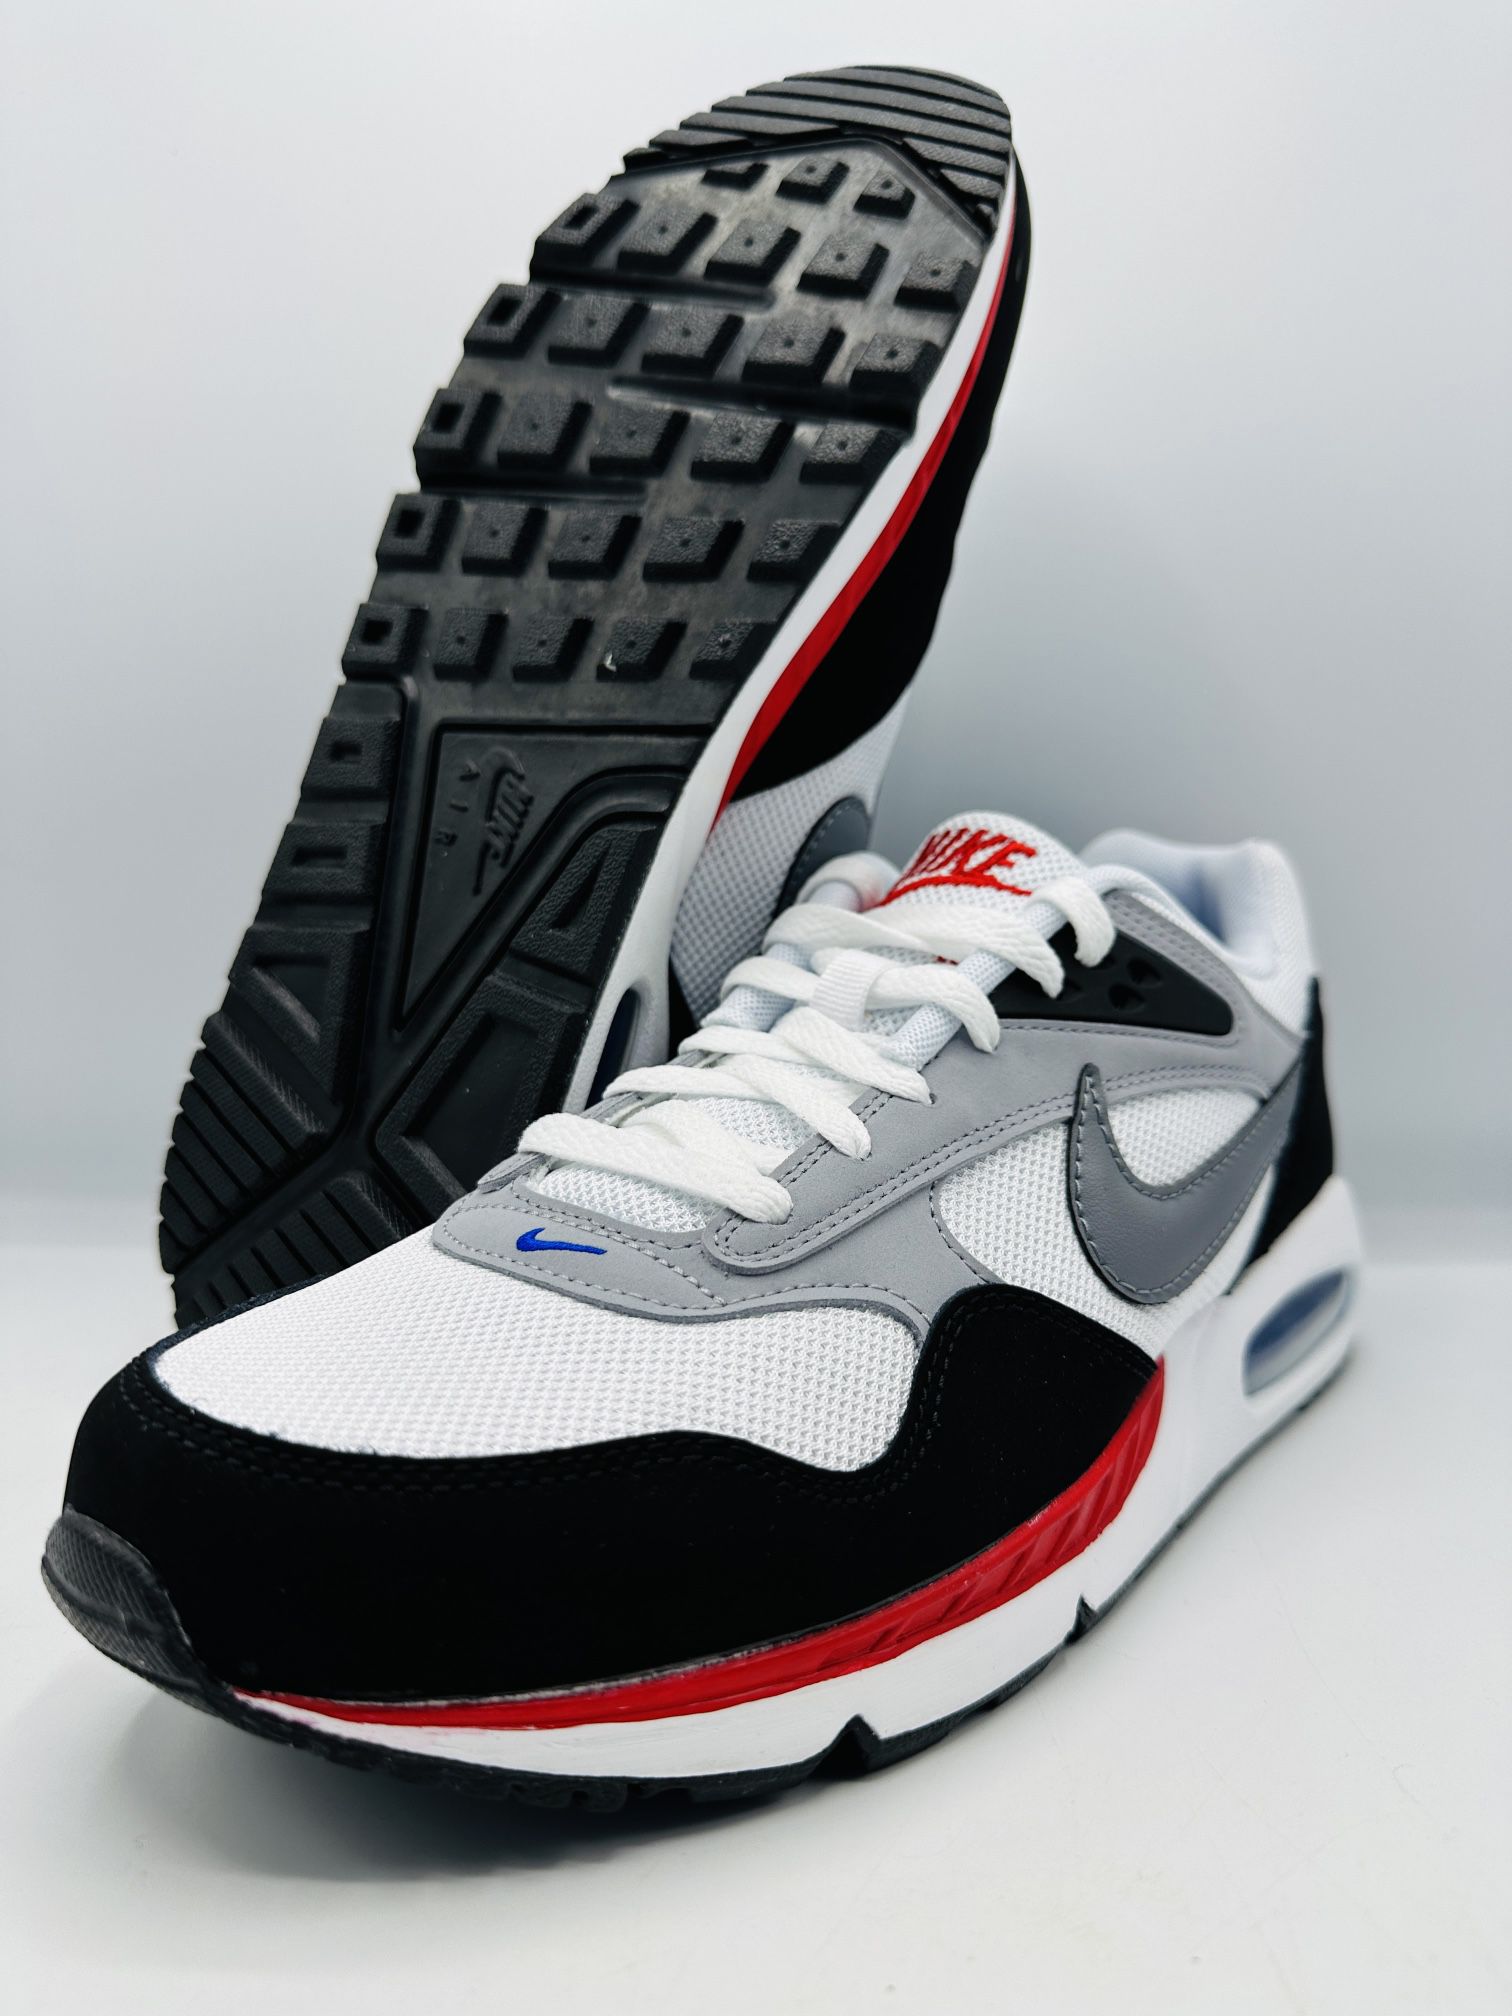 Nike Air Max Correlate Shoe White Black Cool Gray 511416 104 Men's Size 9 New